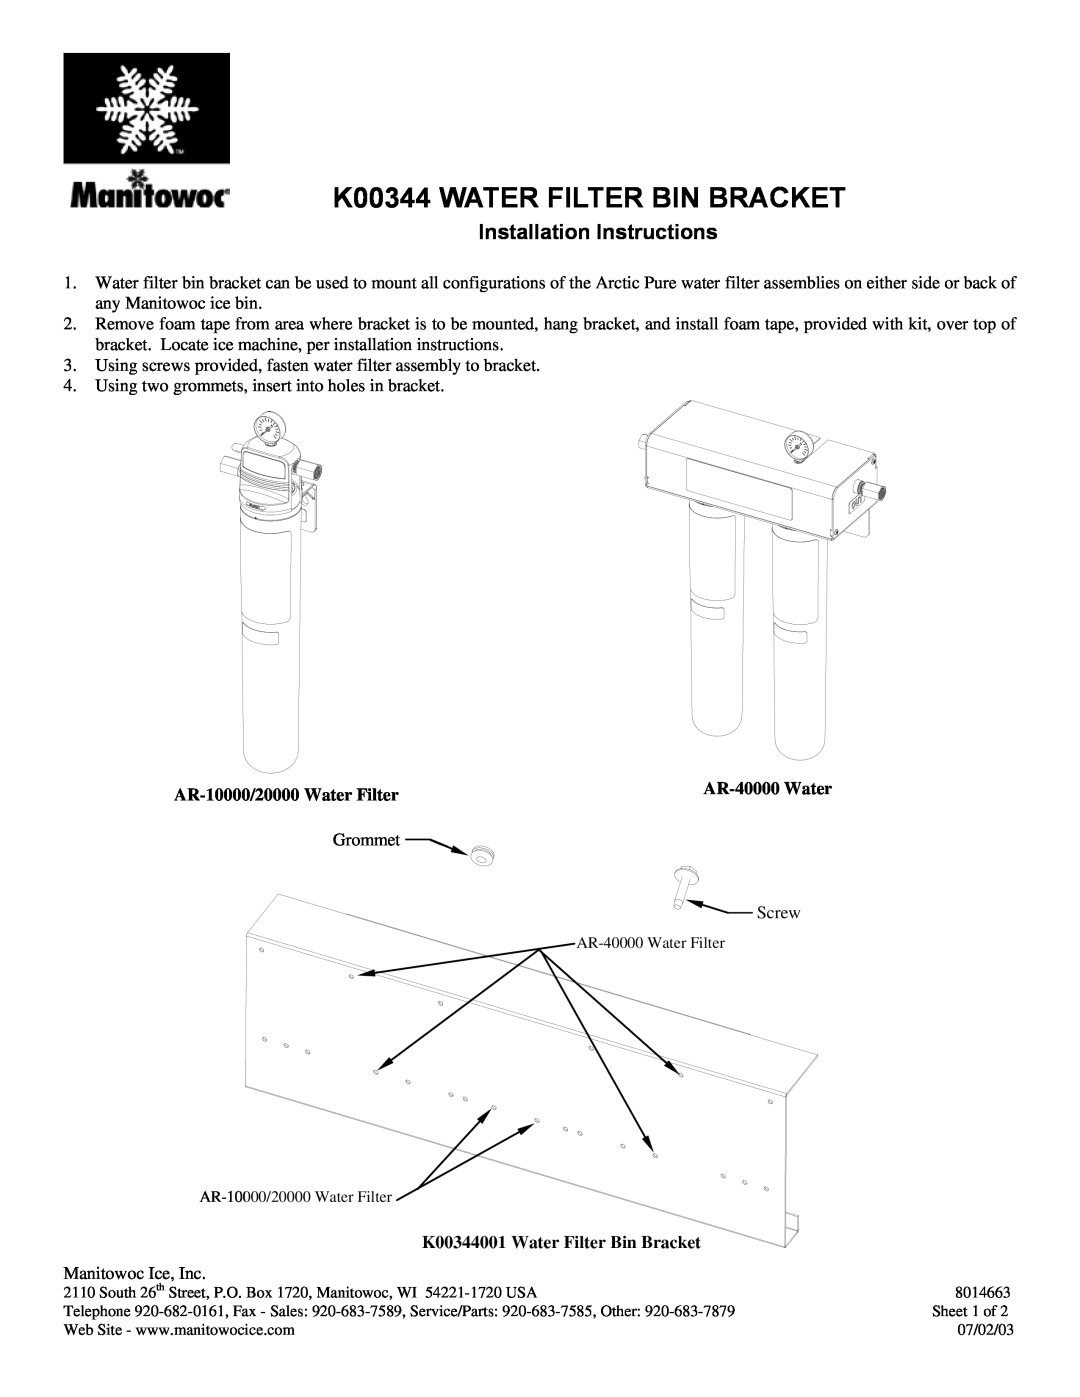 Manitowoc Ice K00344 installation instructions AR-10000/20000 Water Filter, AR-40000 Water, Installation Instructions 